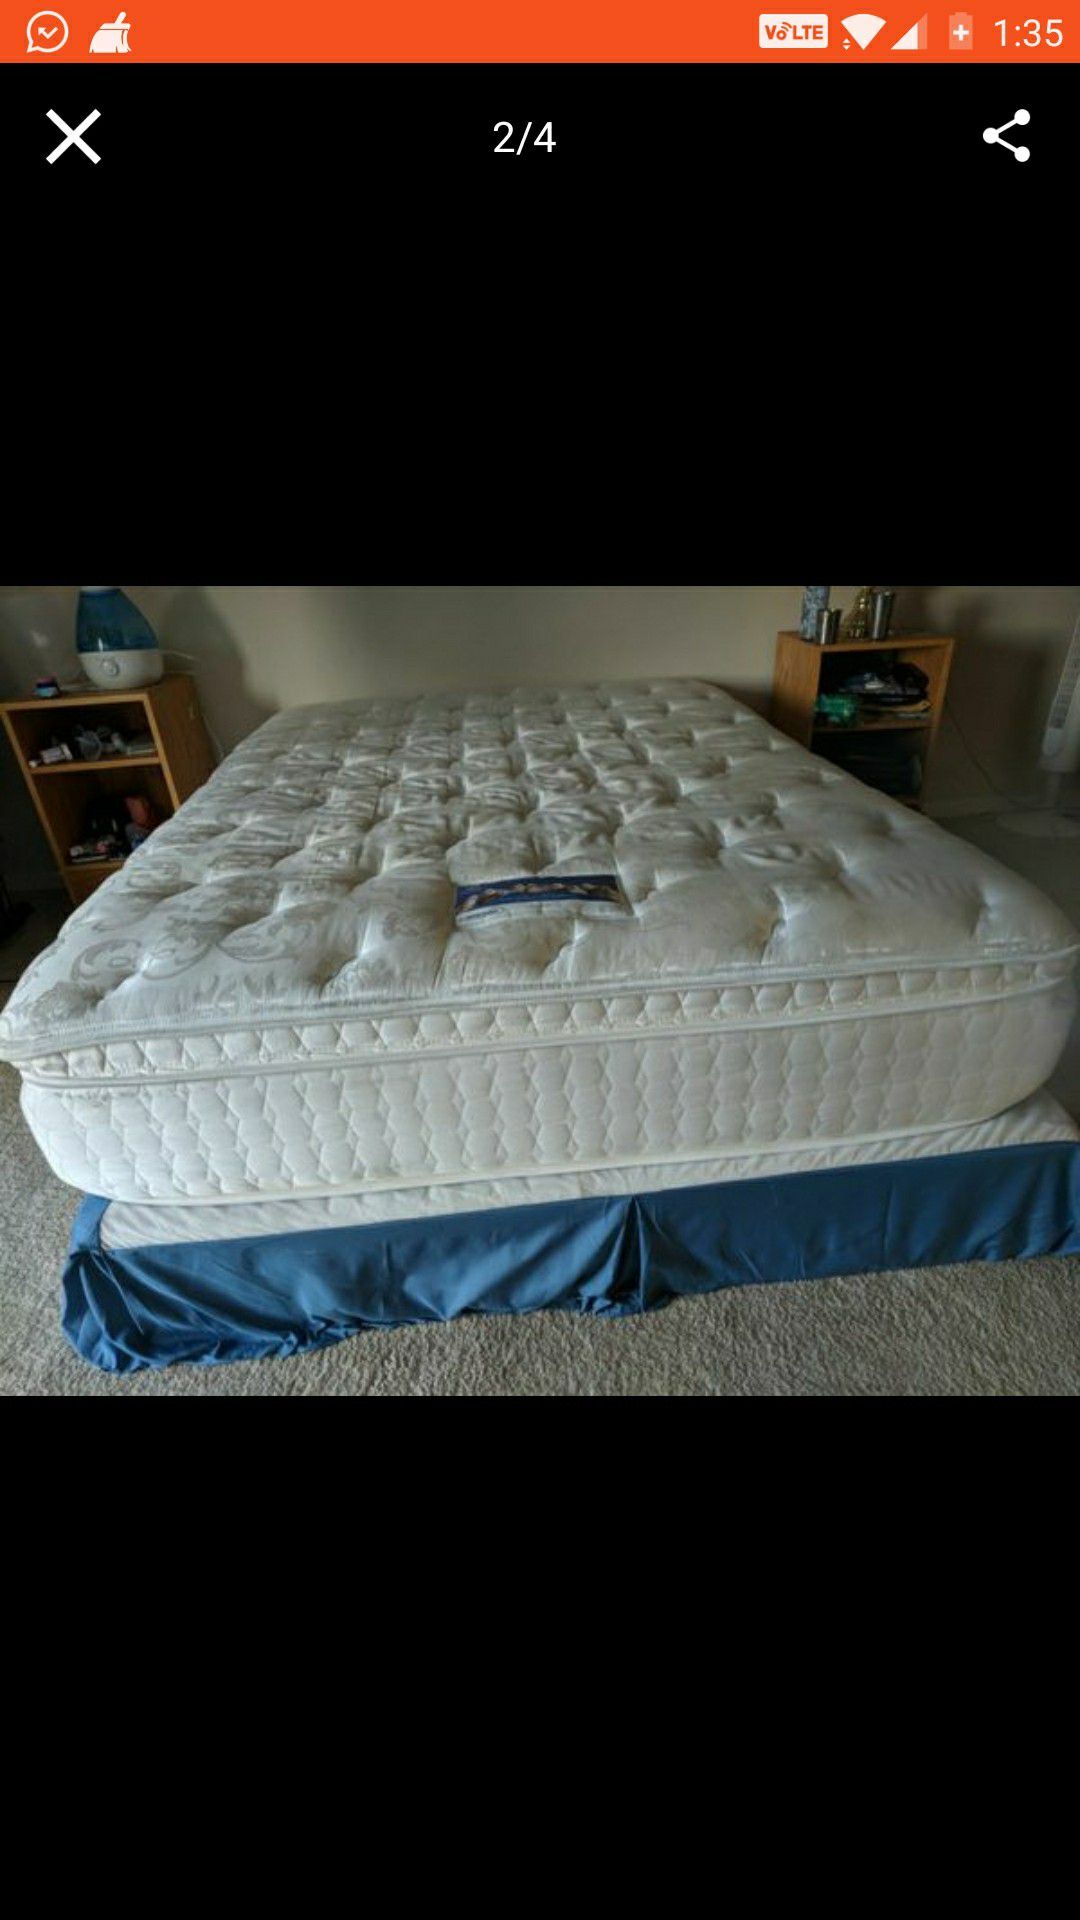 Serta perfect sleeper queen mattress with box spring